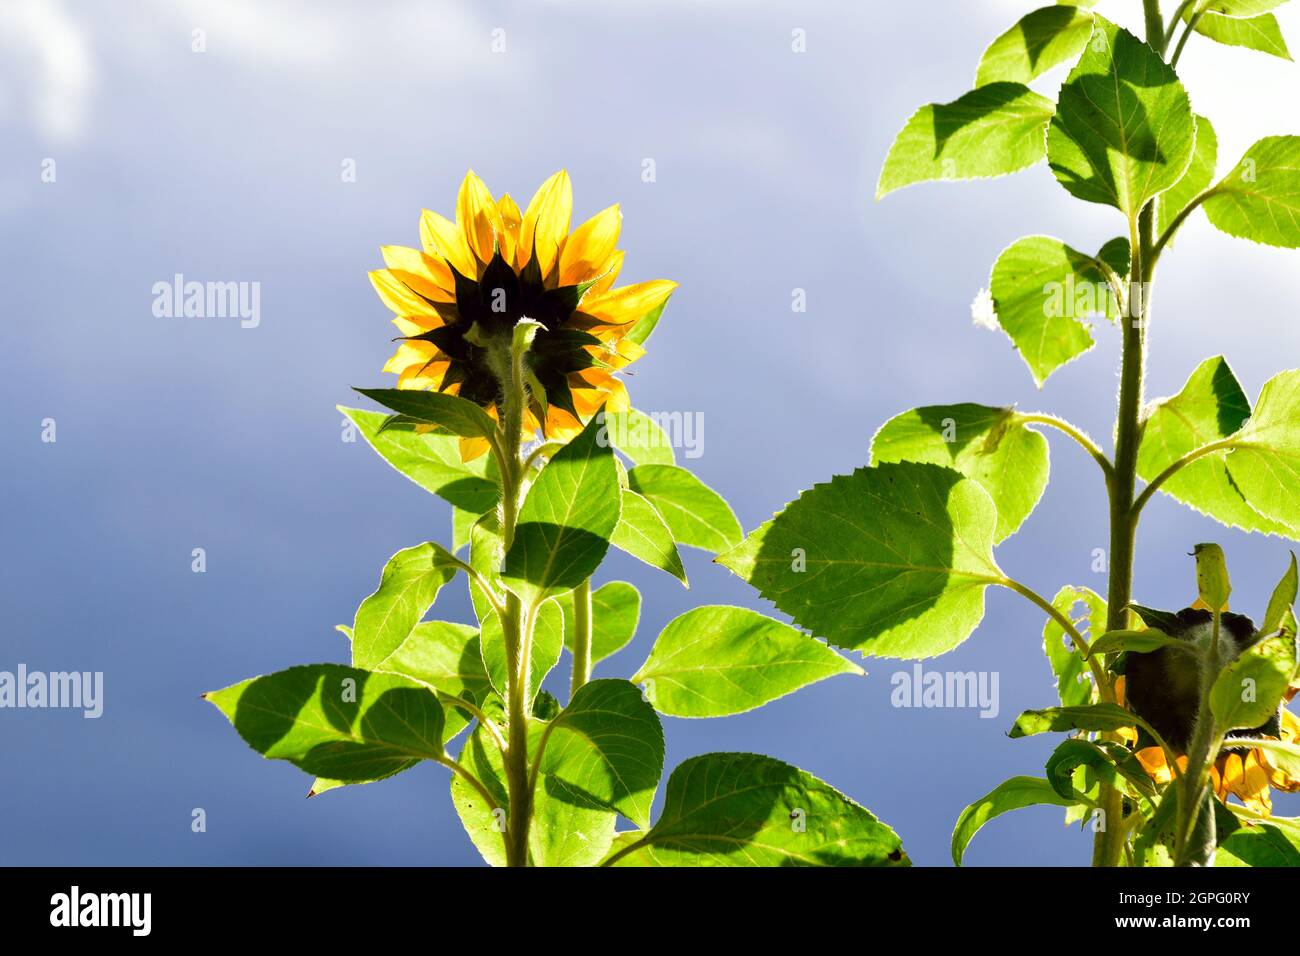 Urban gardening - sunflowers and stormclouds Stock Photo